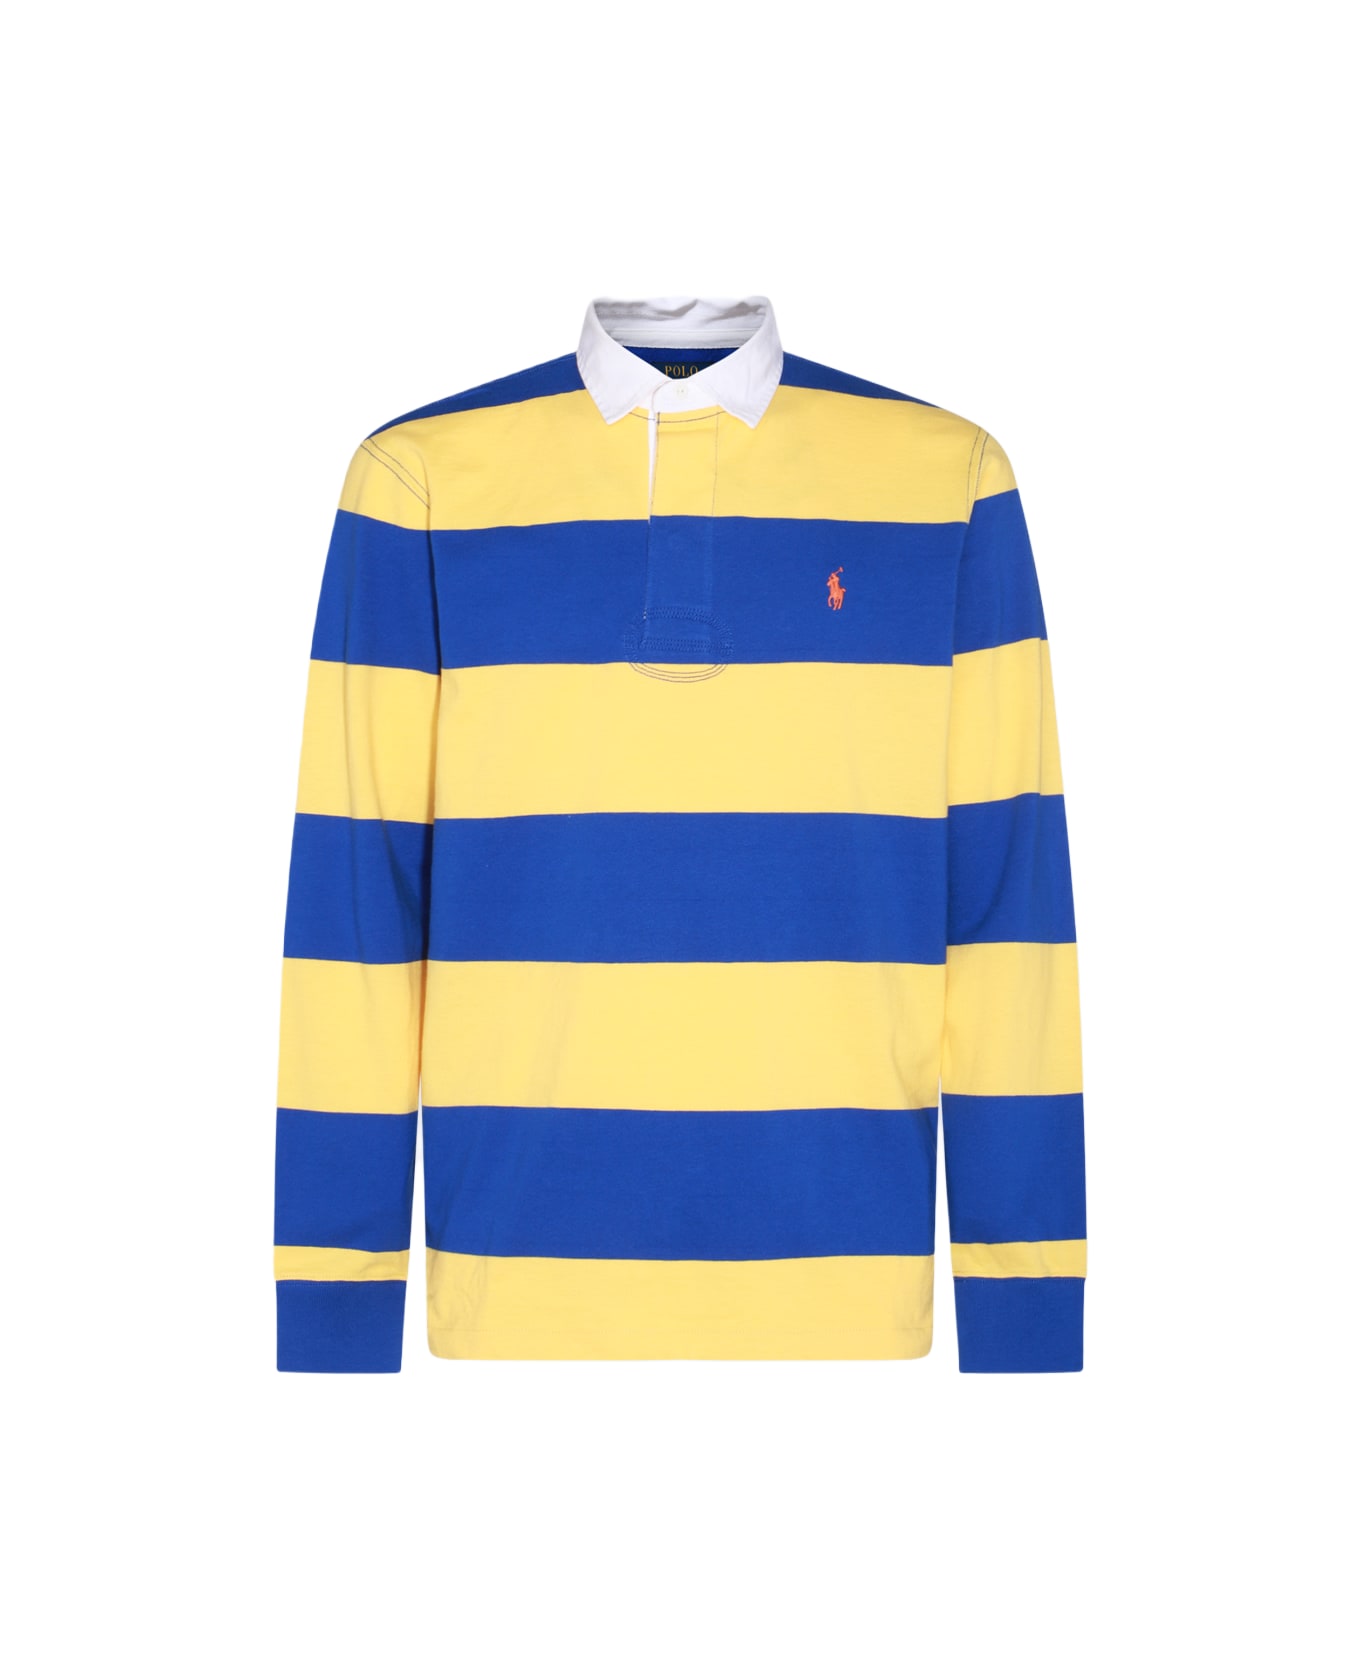 Ralph Lauren Yellow And Blue Cotton Polo Shirt - Chrome Yellow Cruise